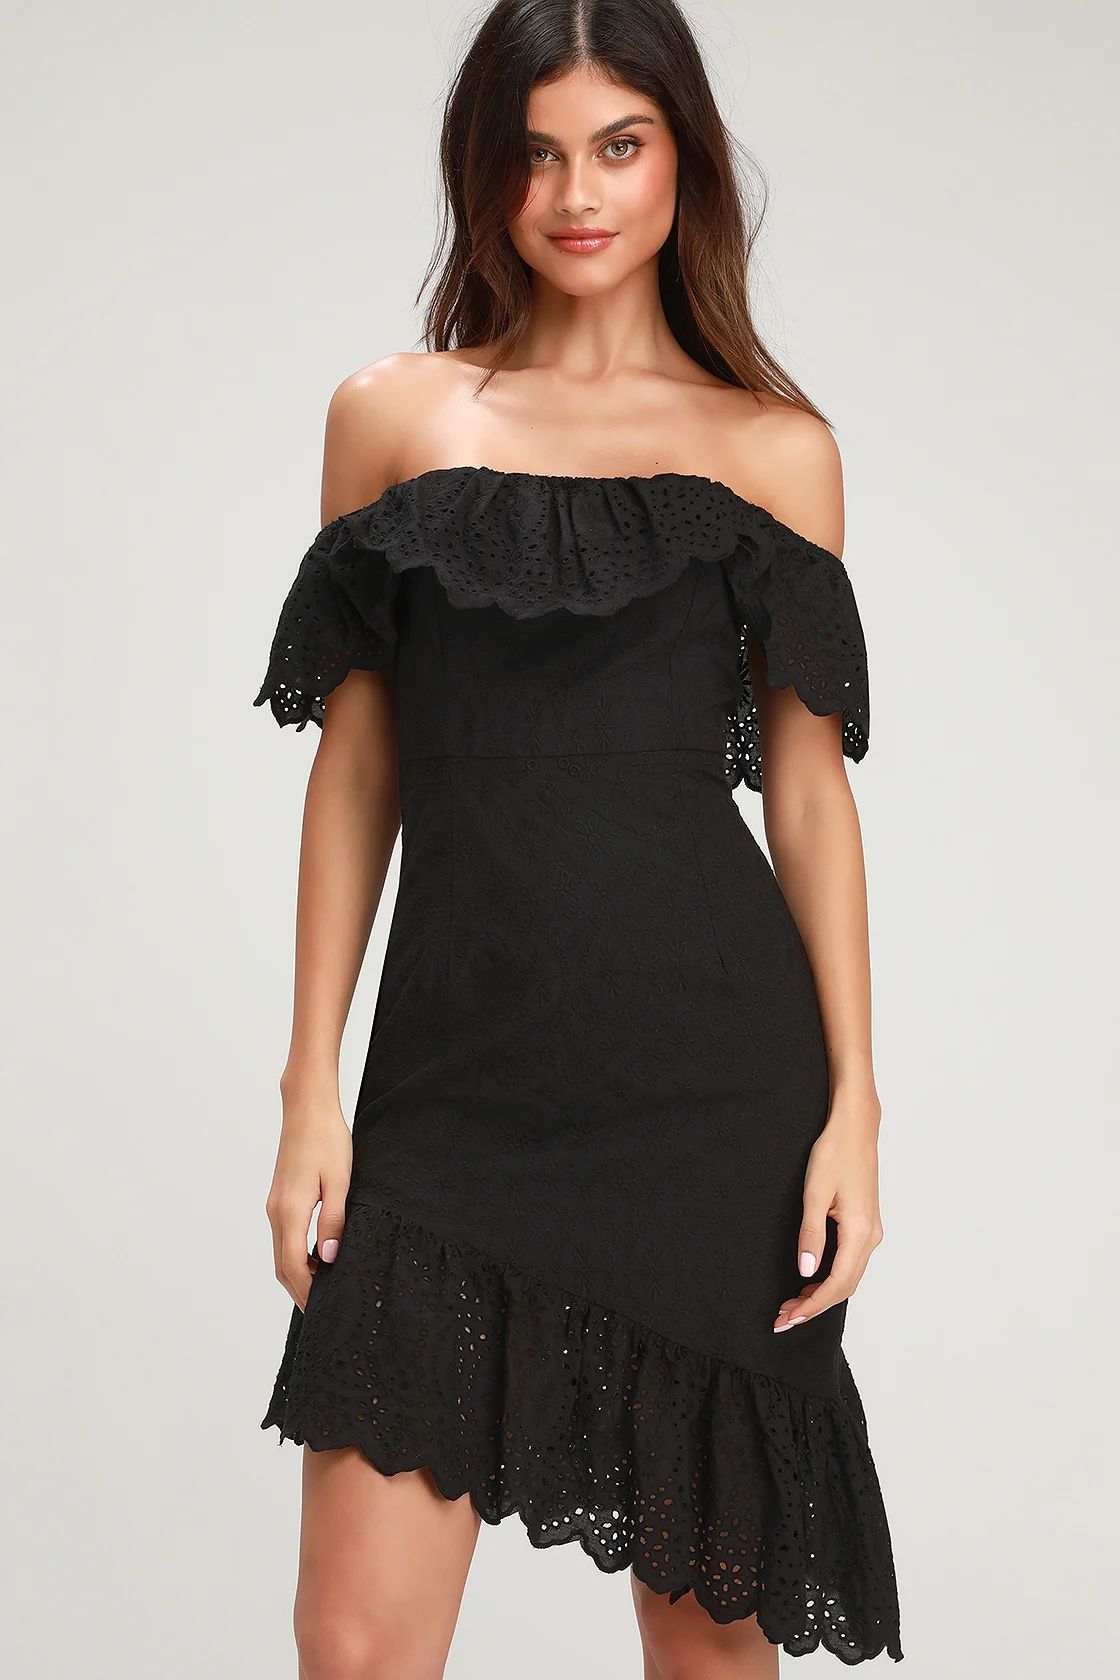 Amberly Black Eyelet Lace Off-the-Shoulder Dress | Lulus